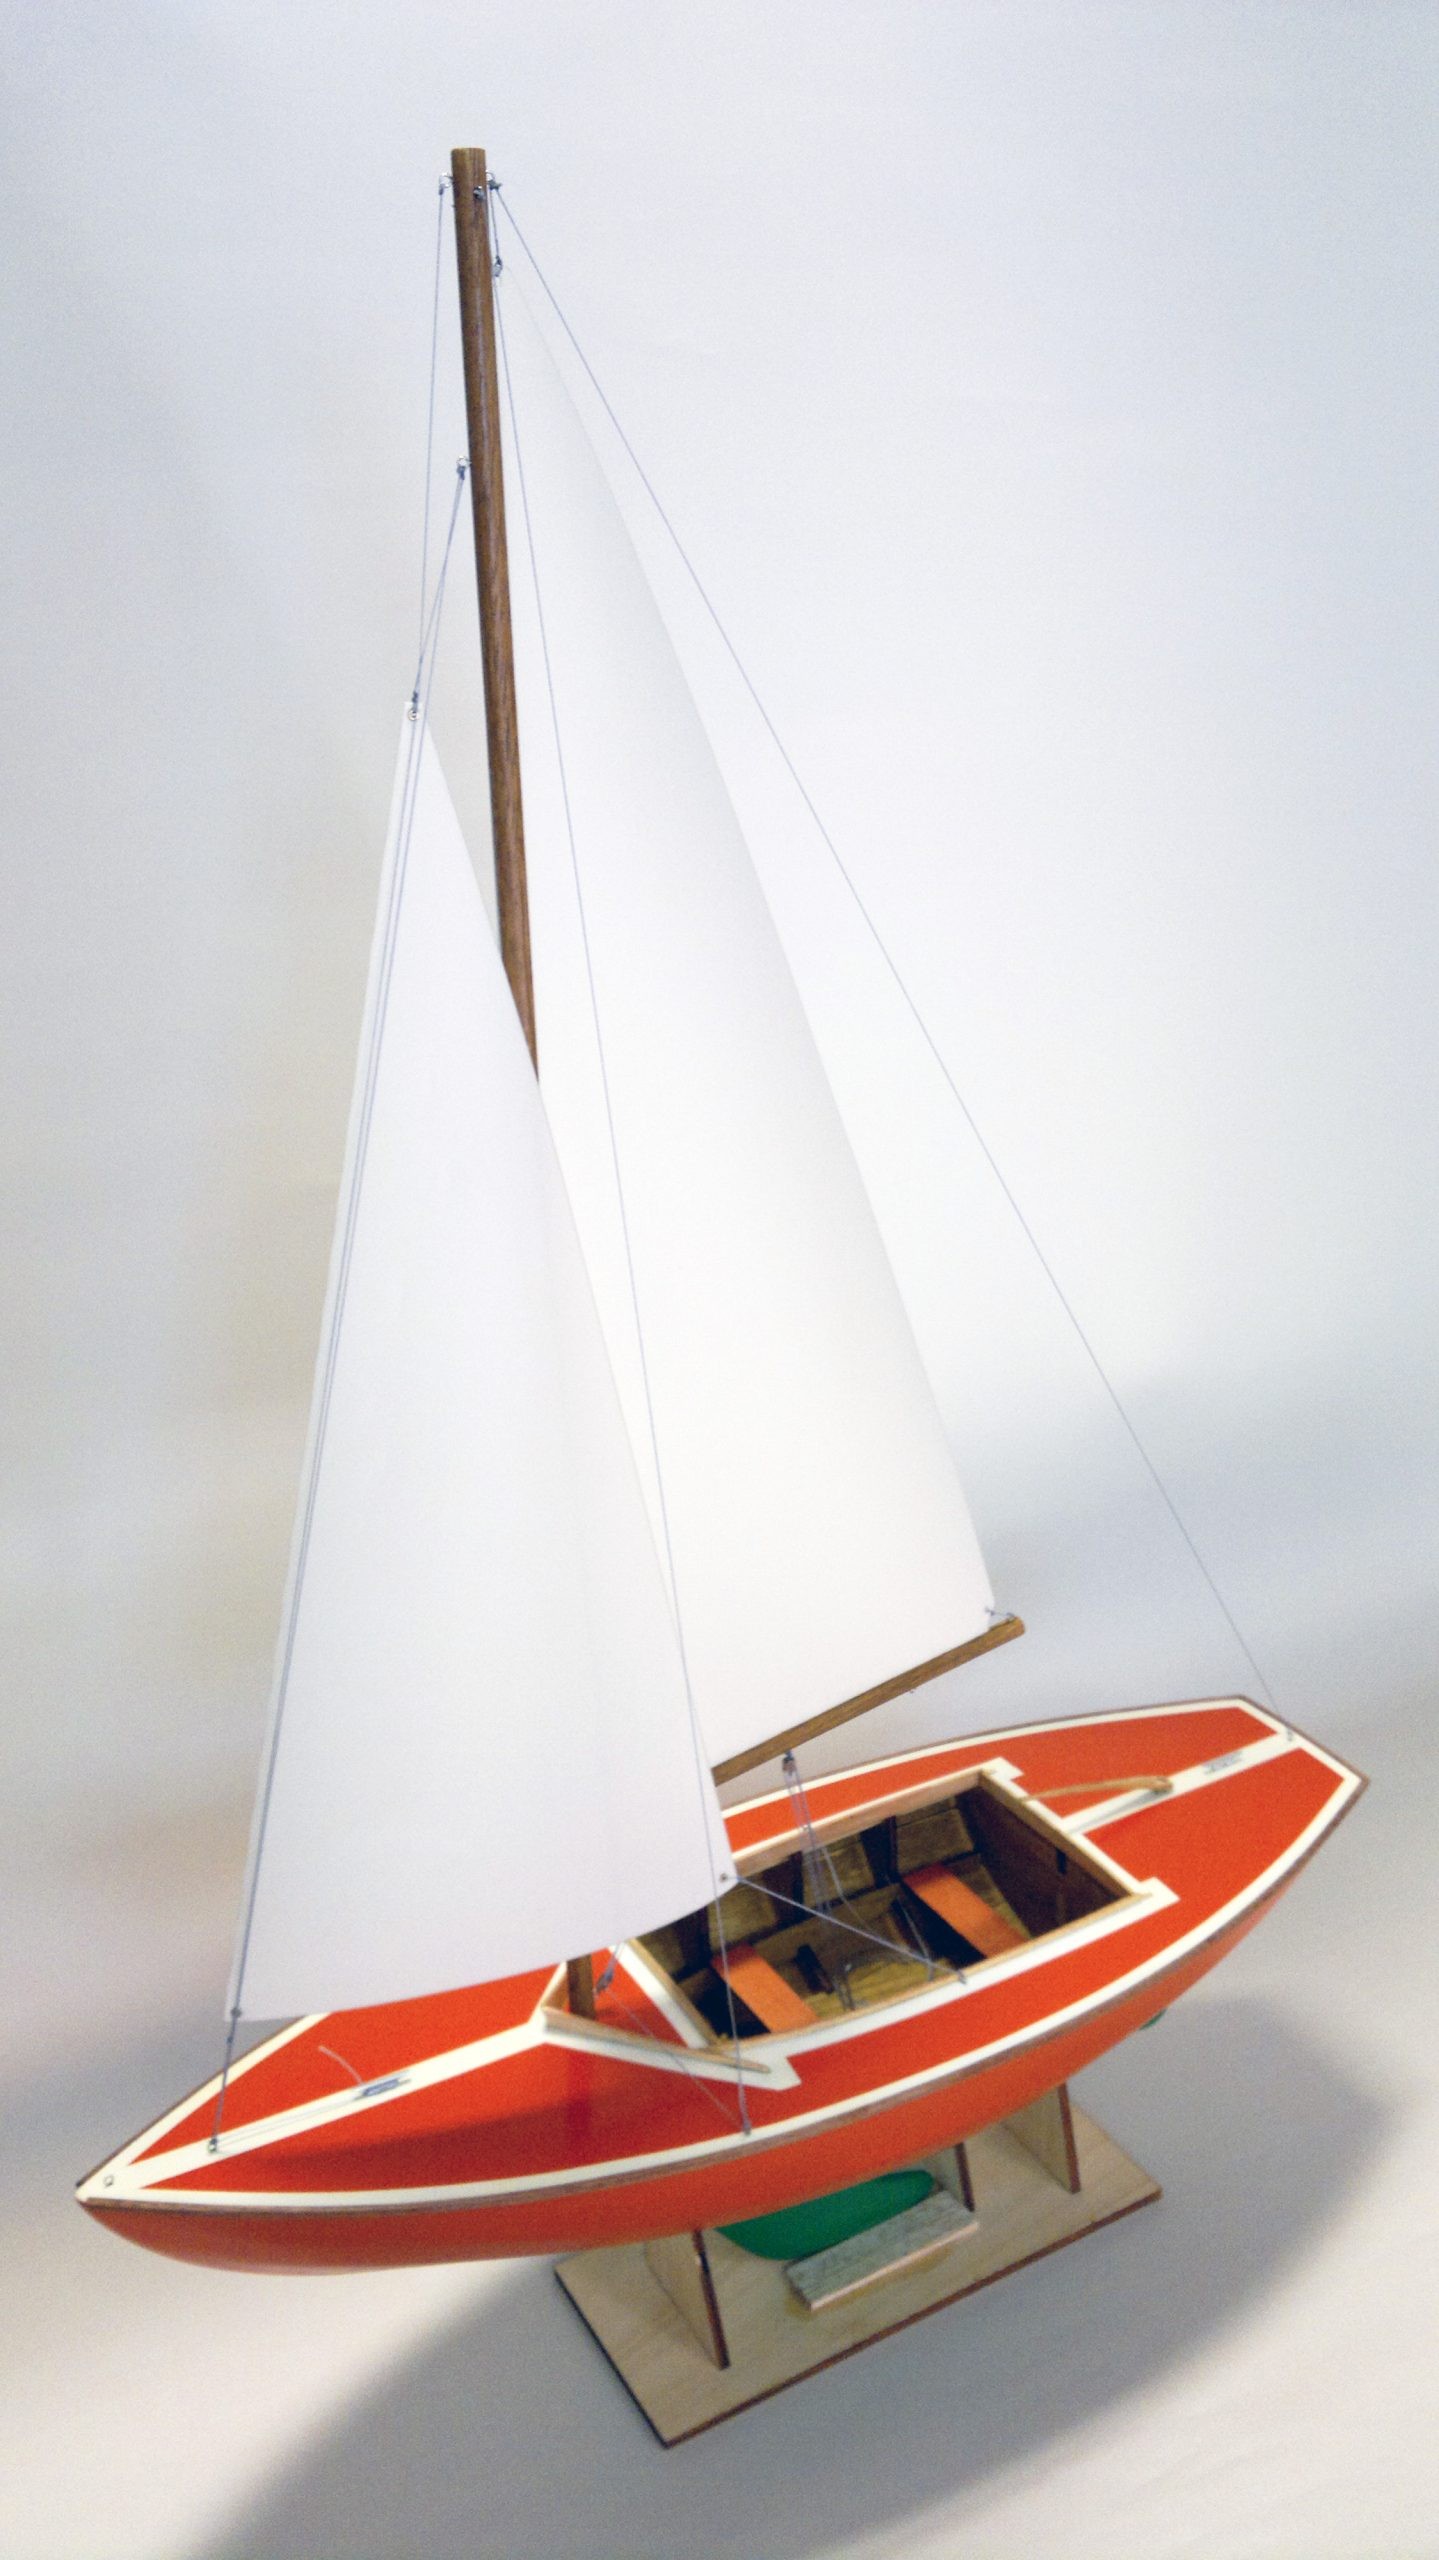 Killing Sailboat Class Racing Boat (Turk, 1:12)